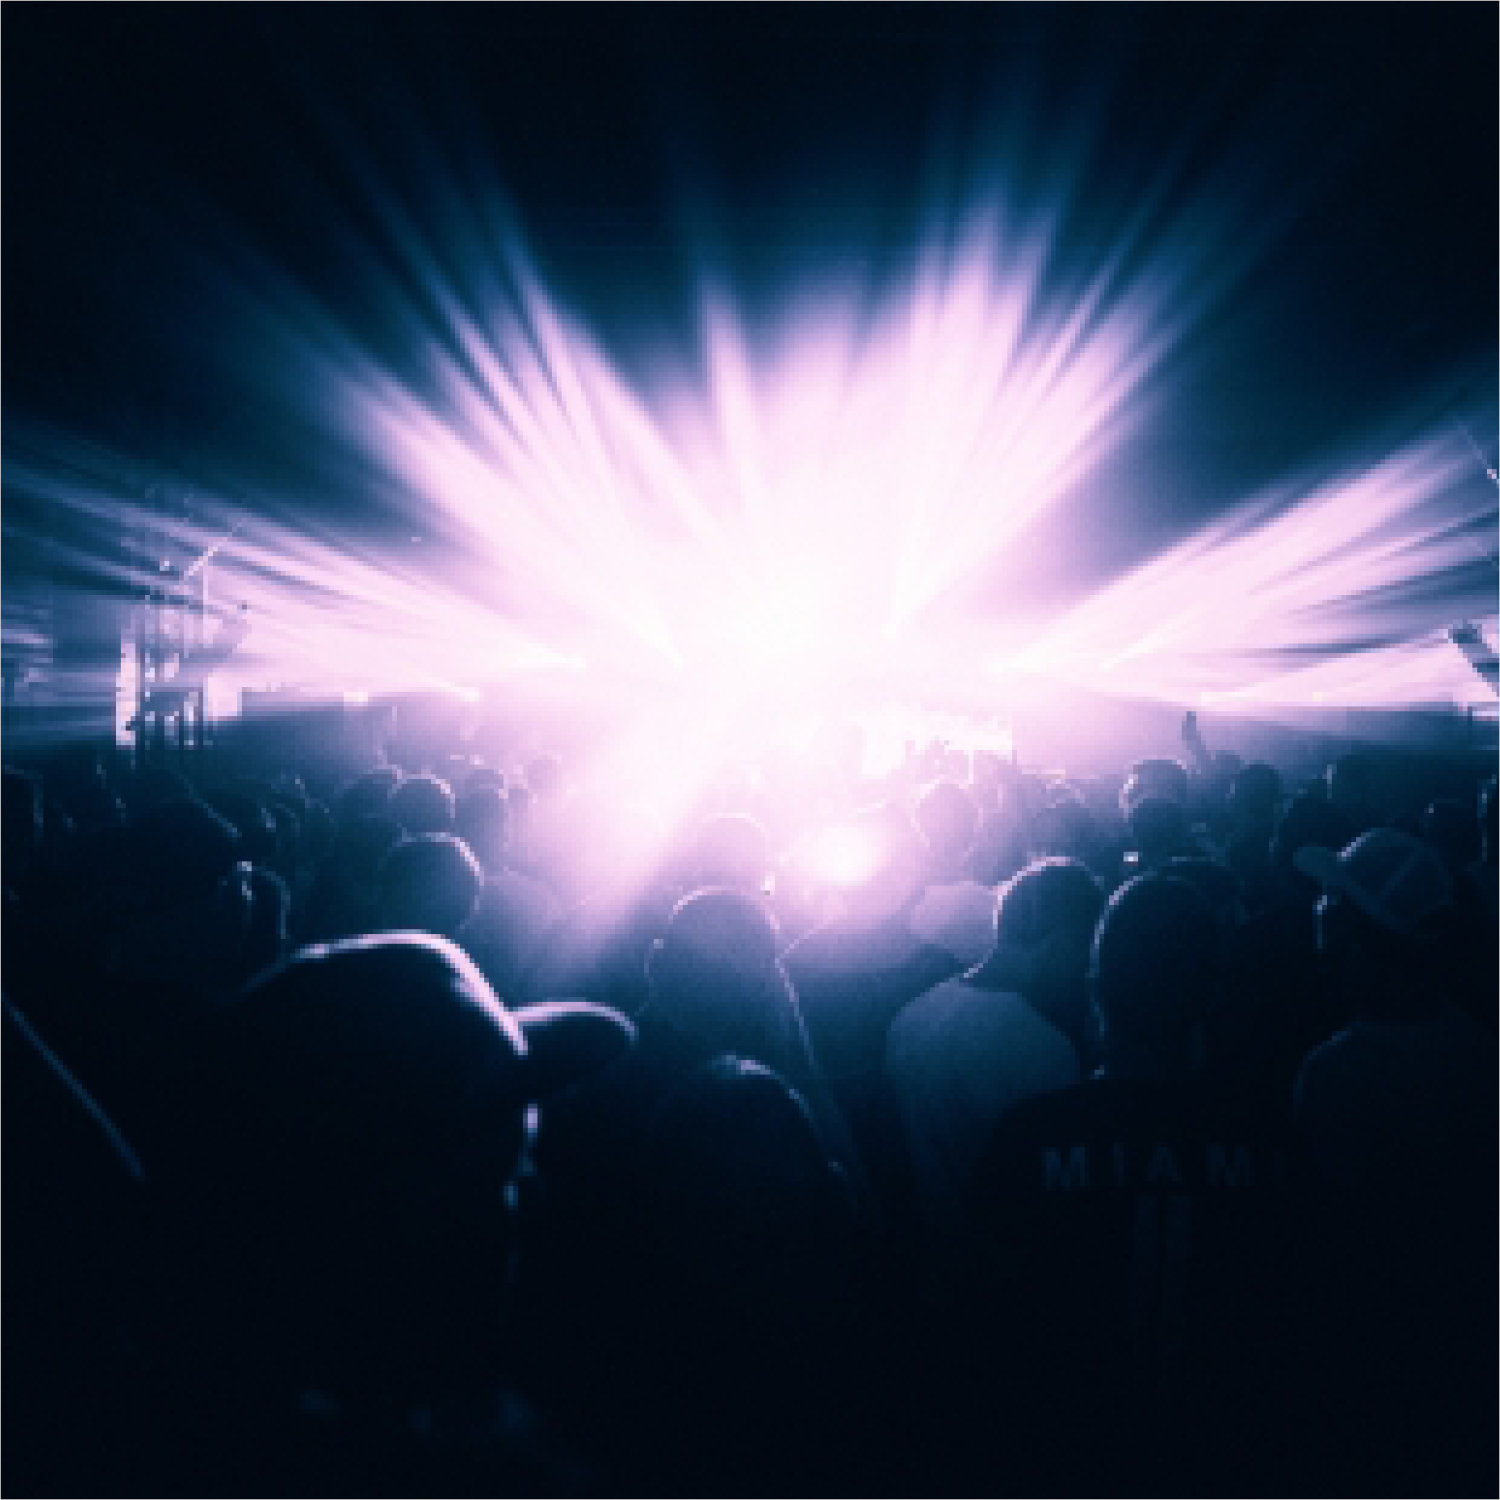 A crowd in a dark venue lit by a bright white light